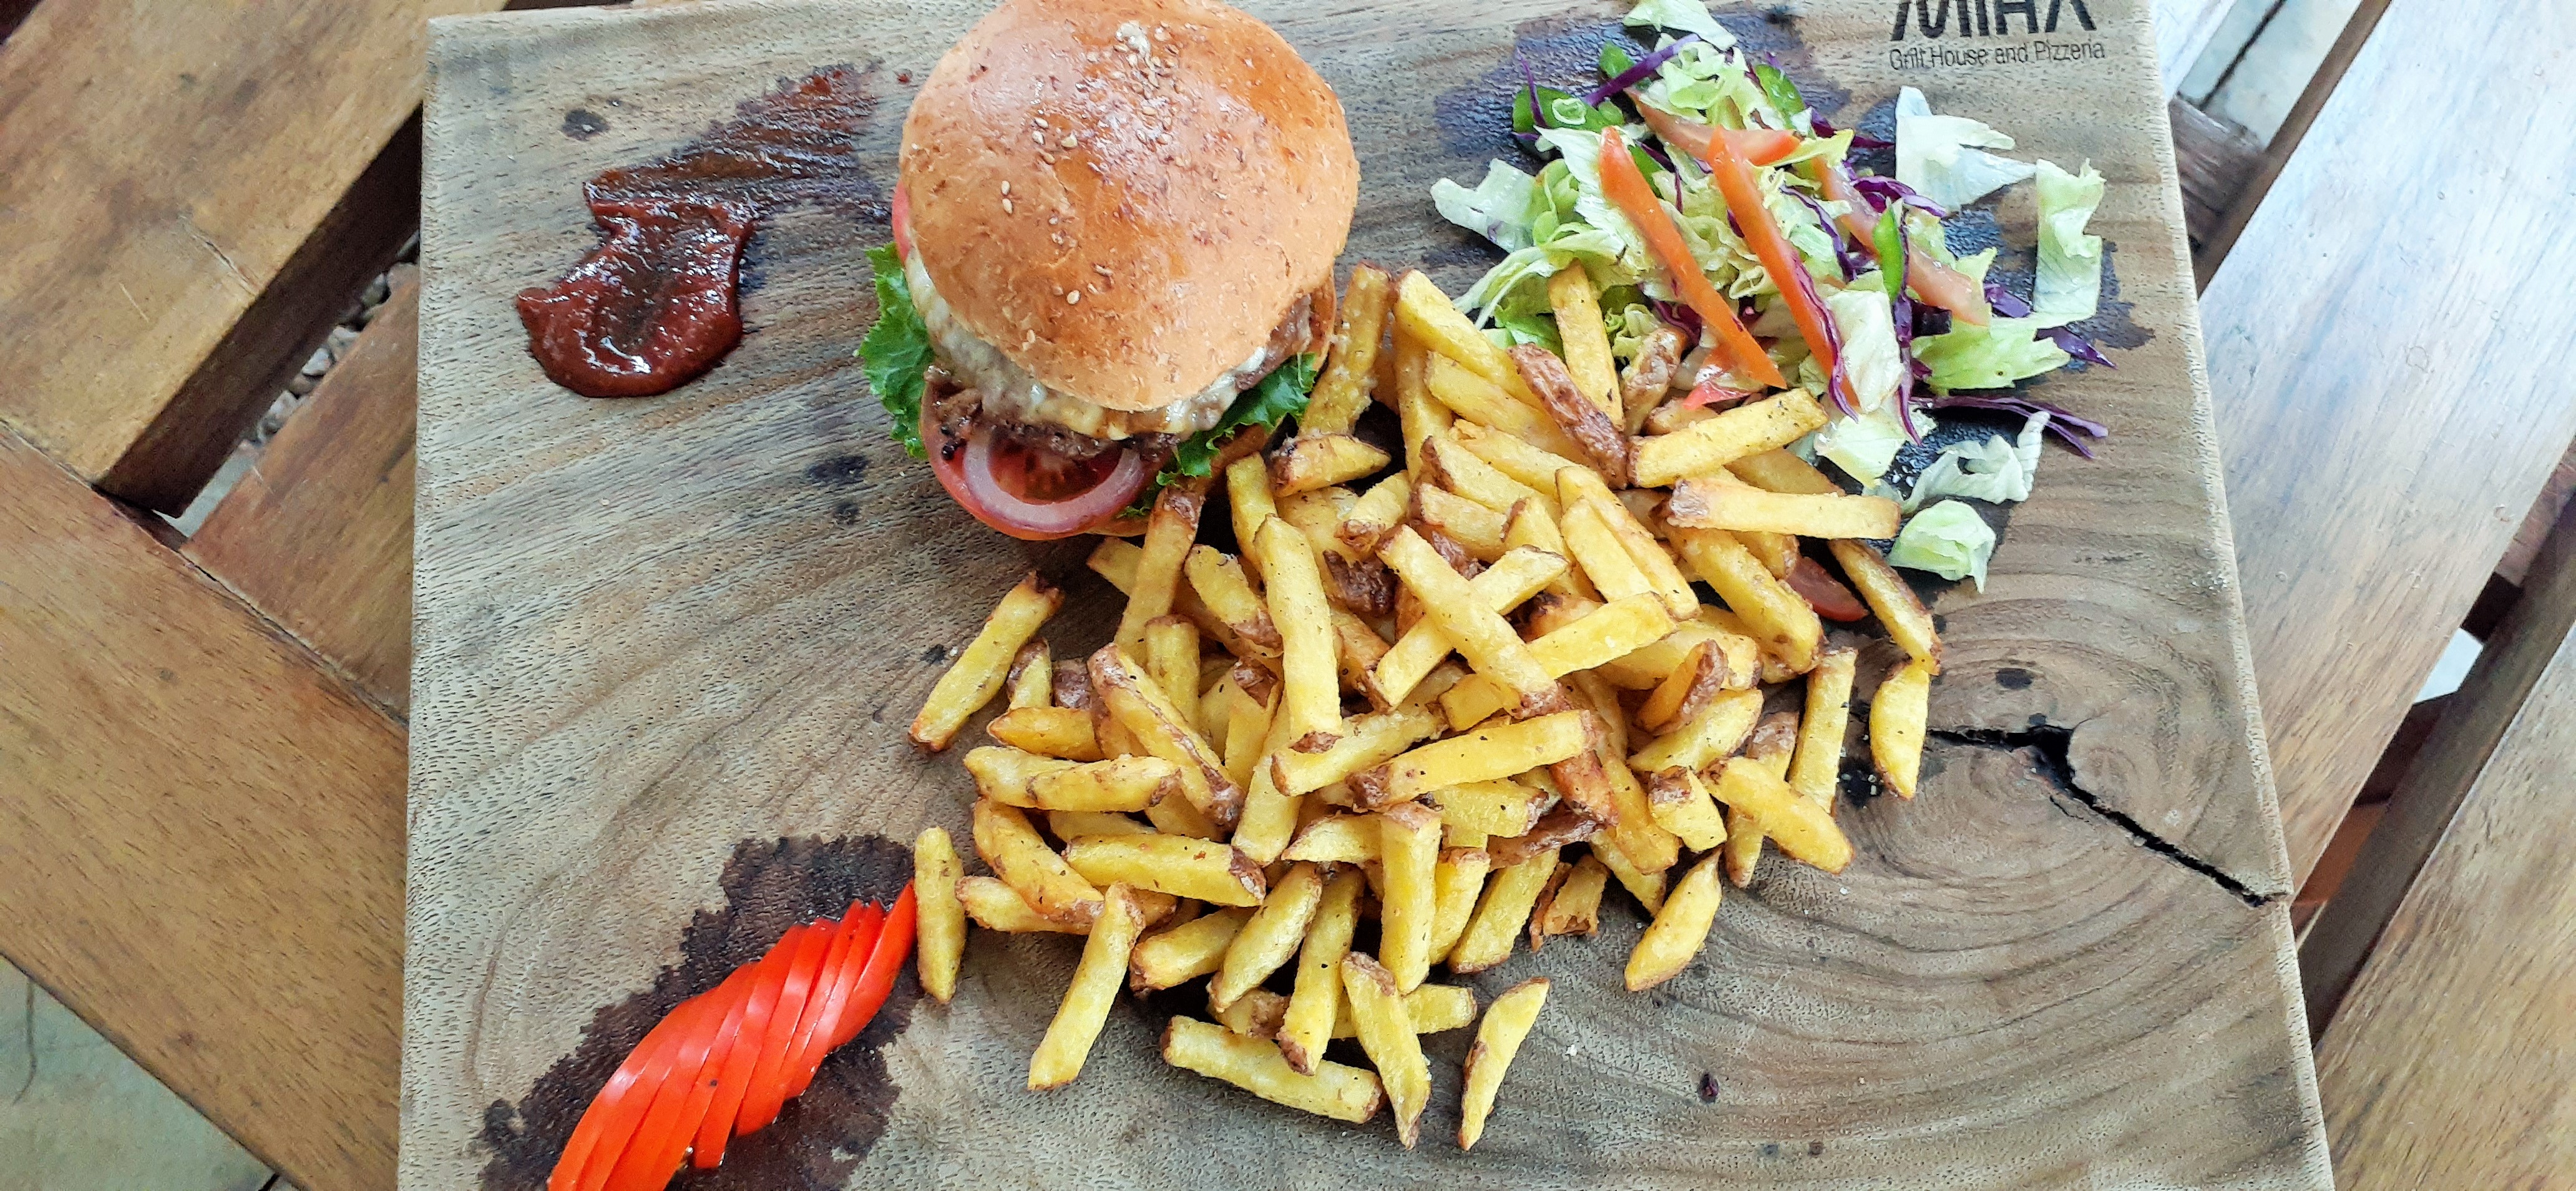 steakboard, burgers in uganda, beef burger kampala